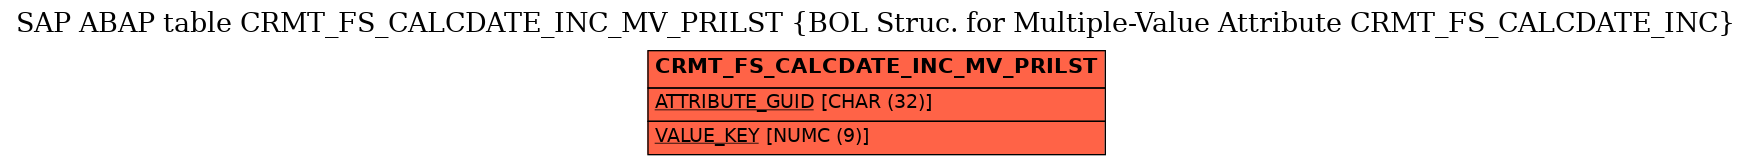 E-R Diagram for table CRMT_FS_CALCDATE_INC_MV_PRILST (BOL Struc. for Multiple-Value Attribute CRMT_FS_CALCDATE_INC)